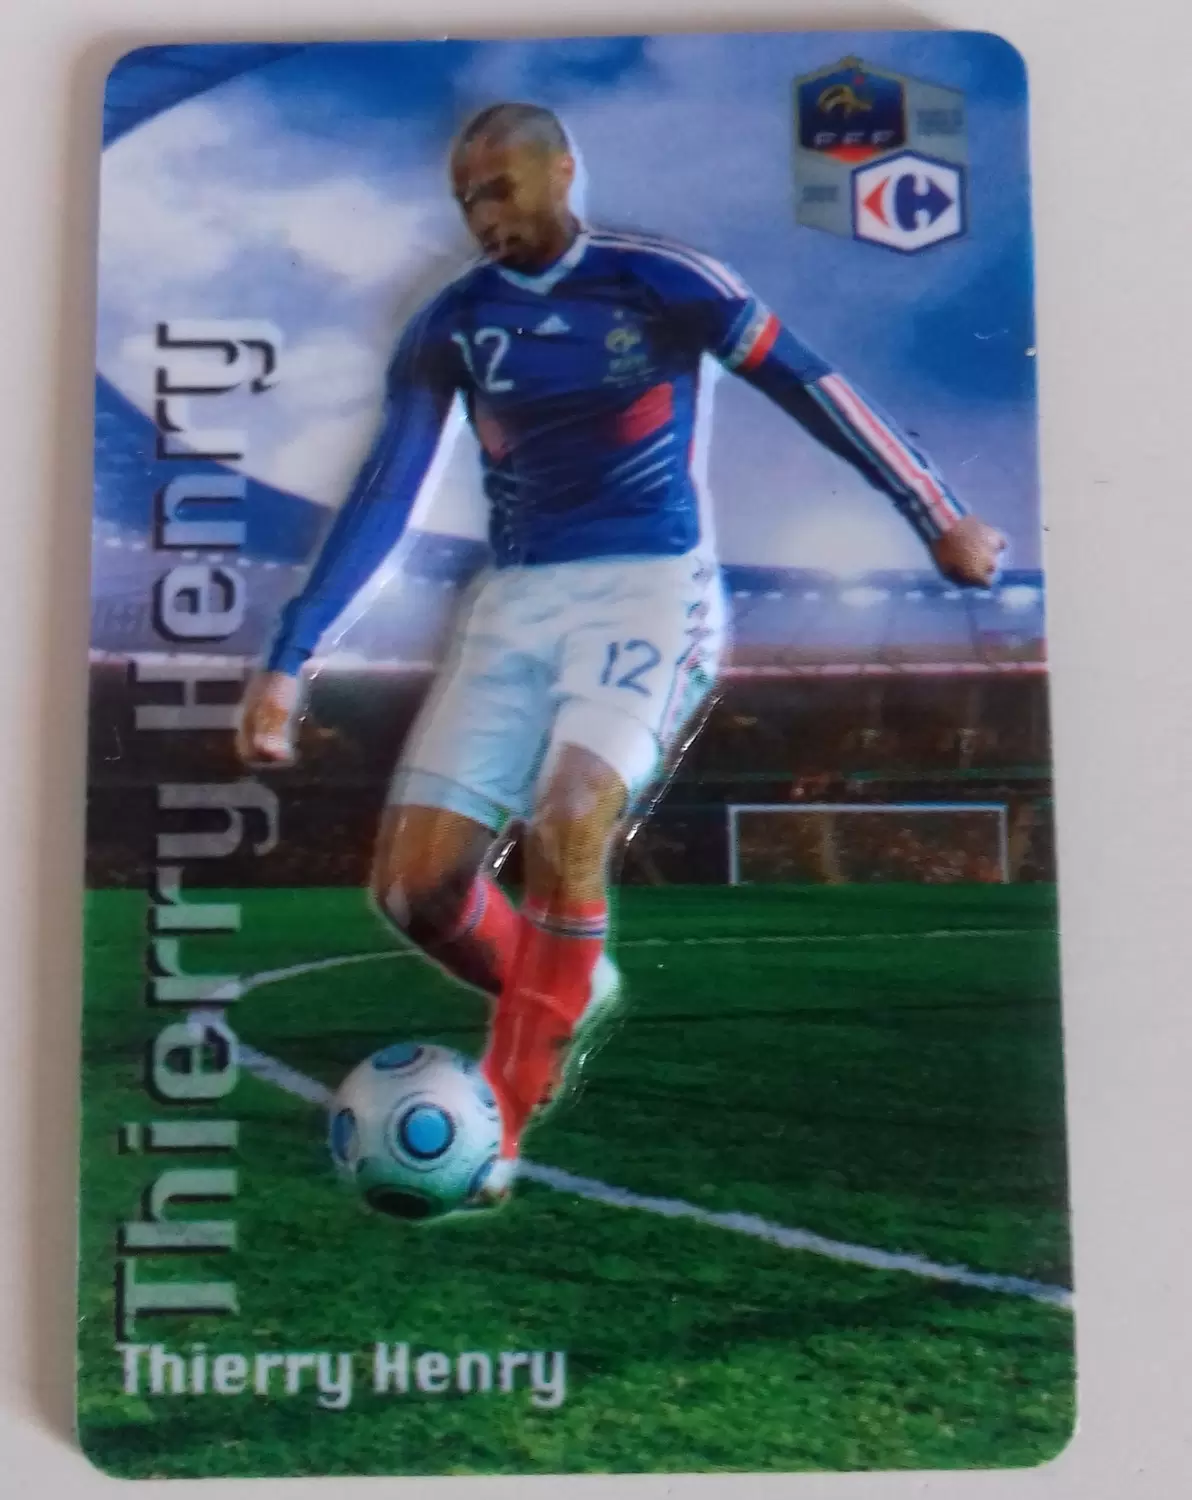 Carrefour - Magnets Equipe de France de Foot 2010 - Thierry Henry